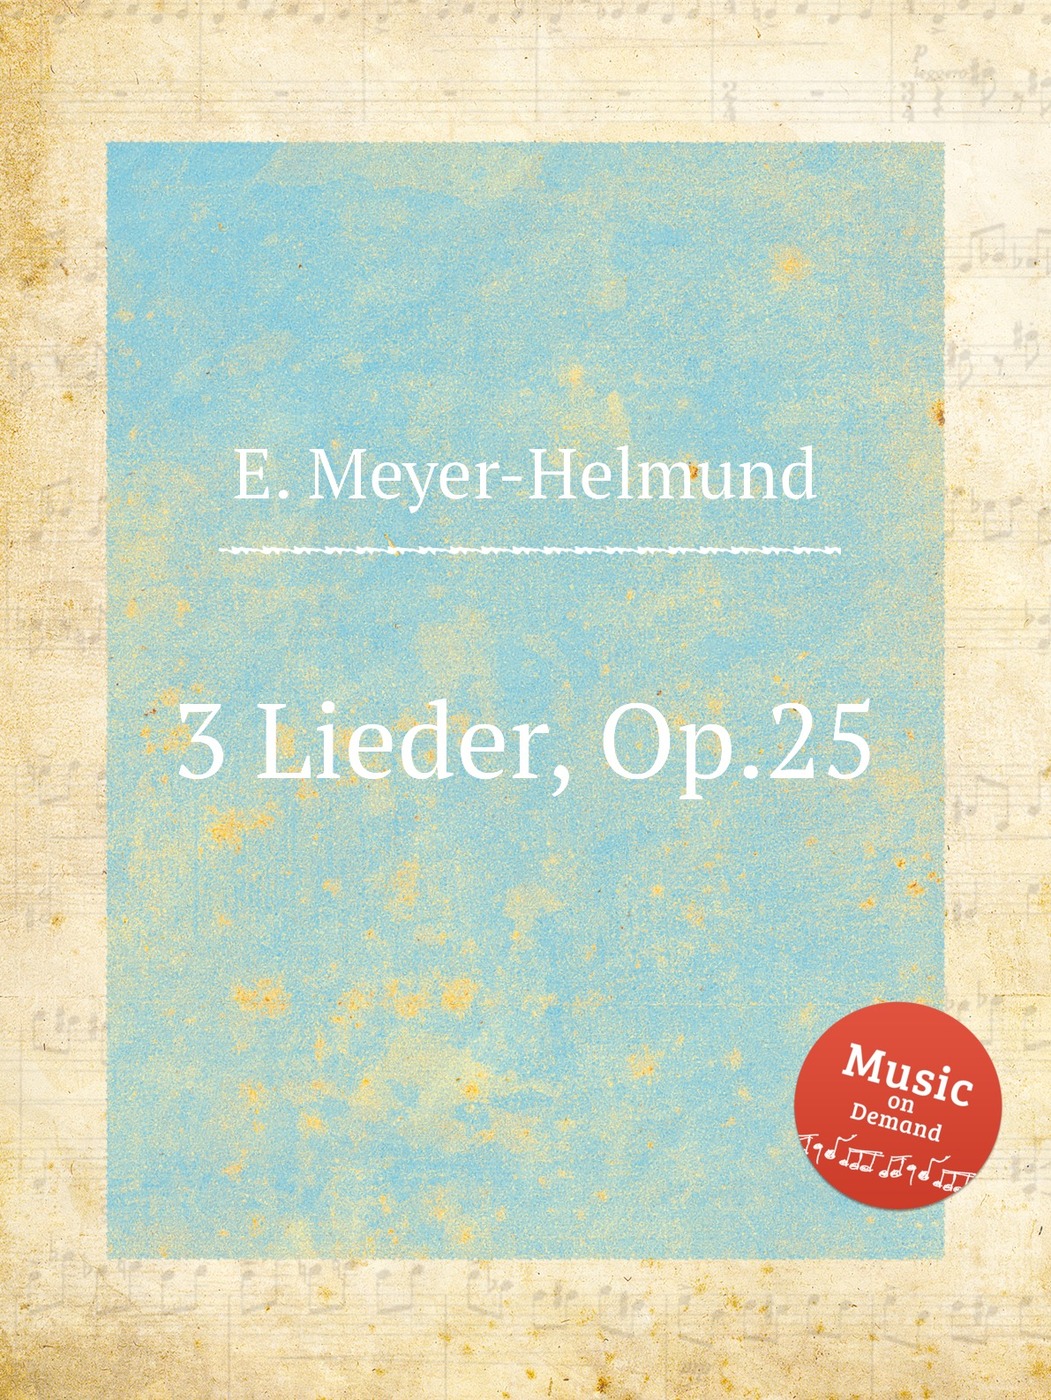 Книги, похожие на "3 Lieder, Op.25" .